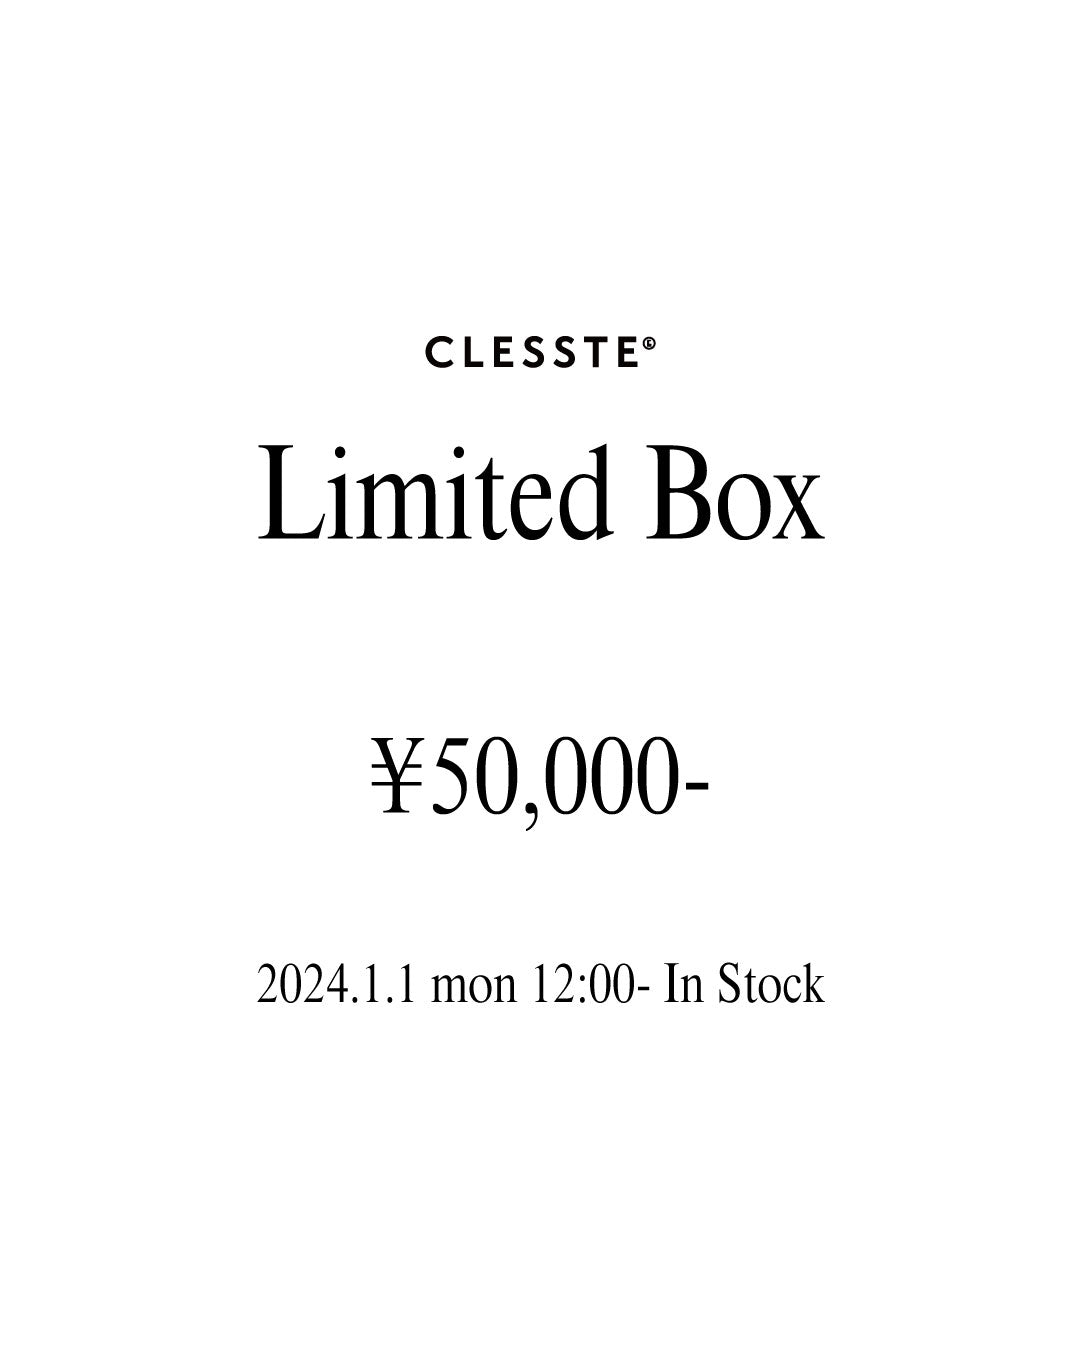 Limited Box ¥50,000.